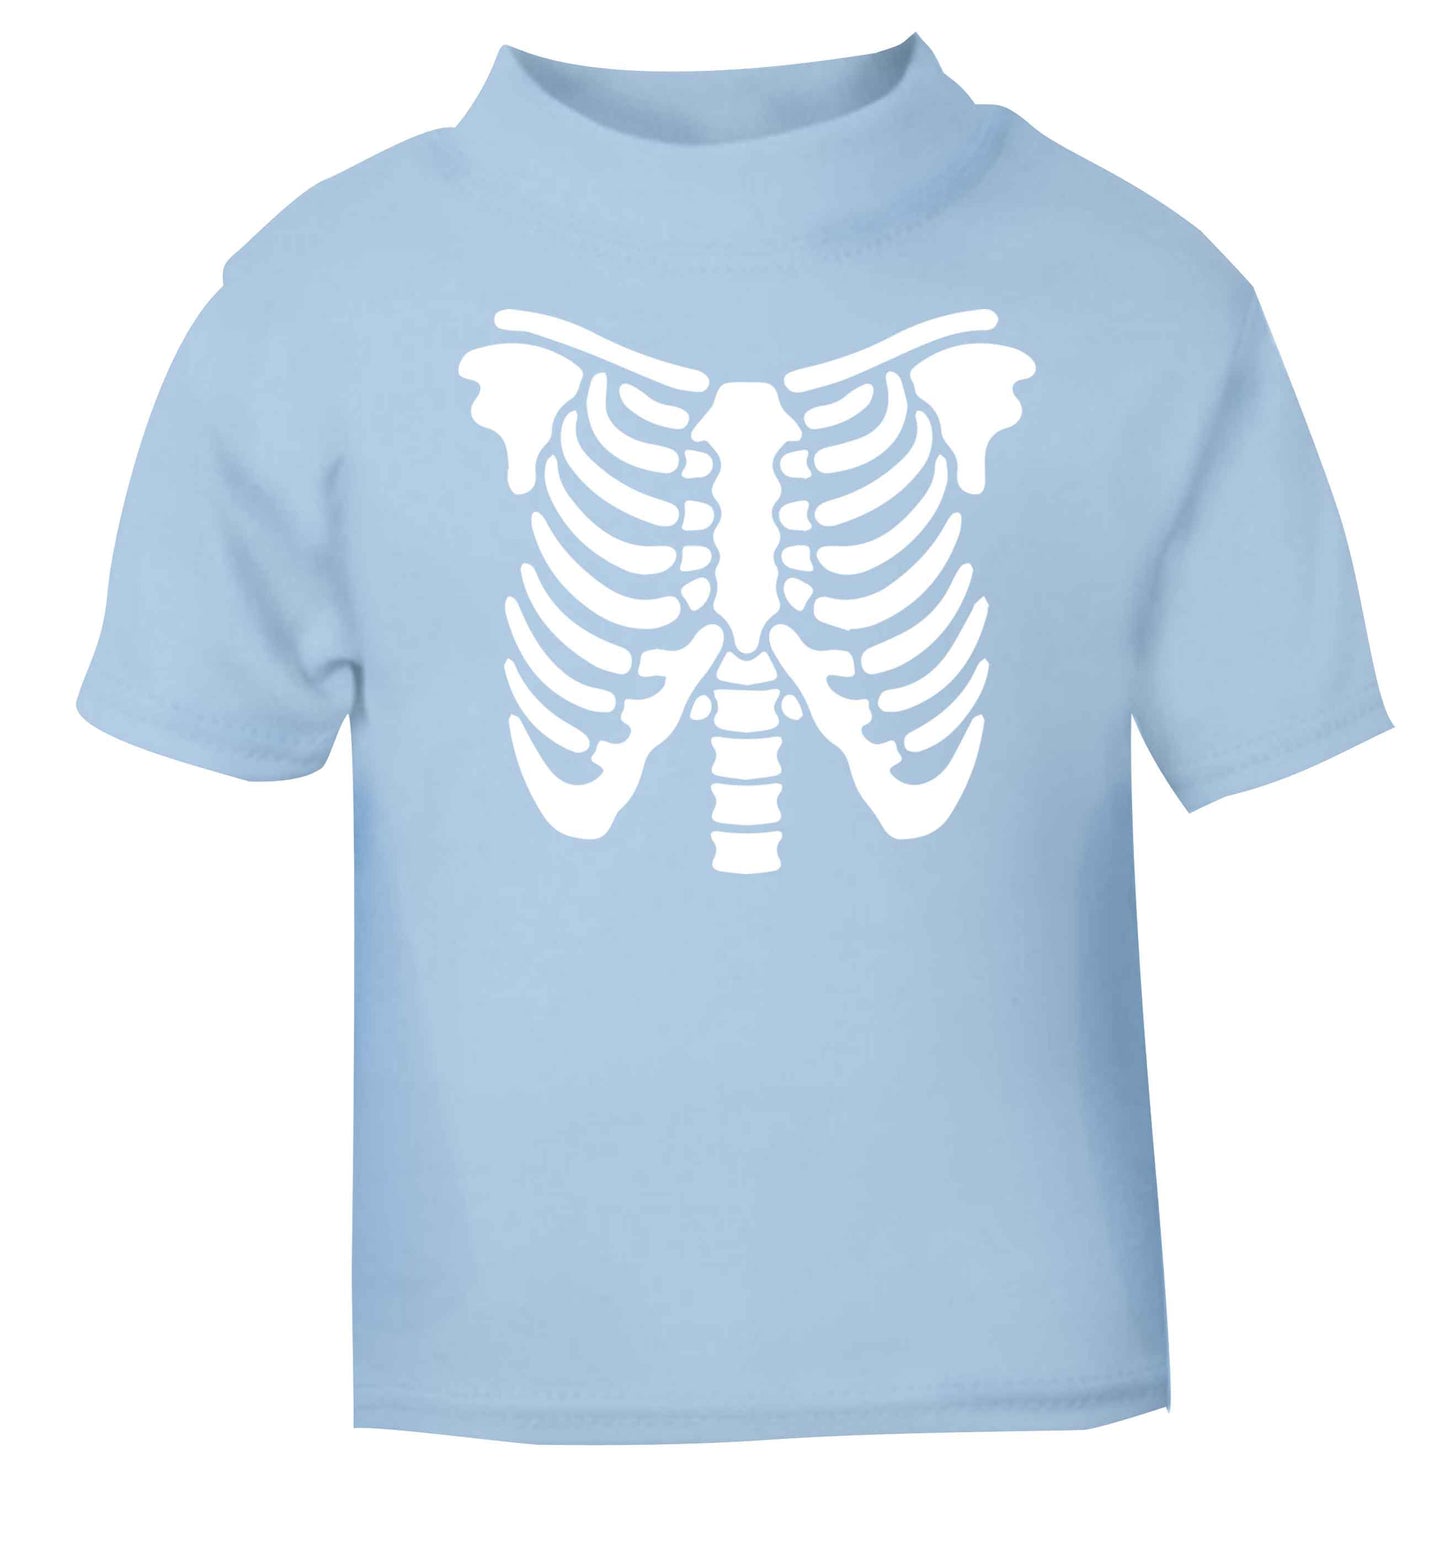 Skeleton ribcage light blue baby toddler Tshirt 2 Years